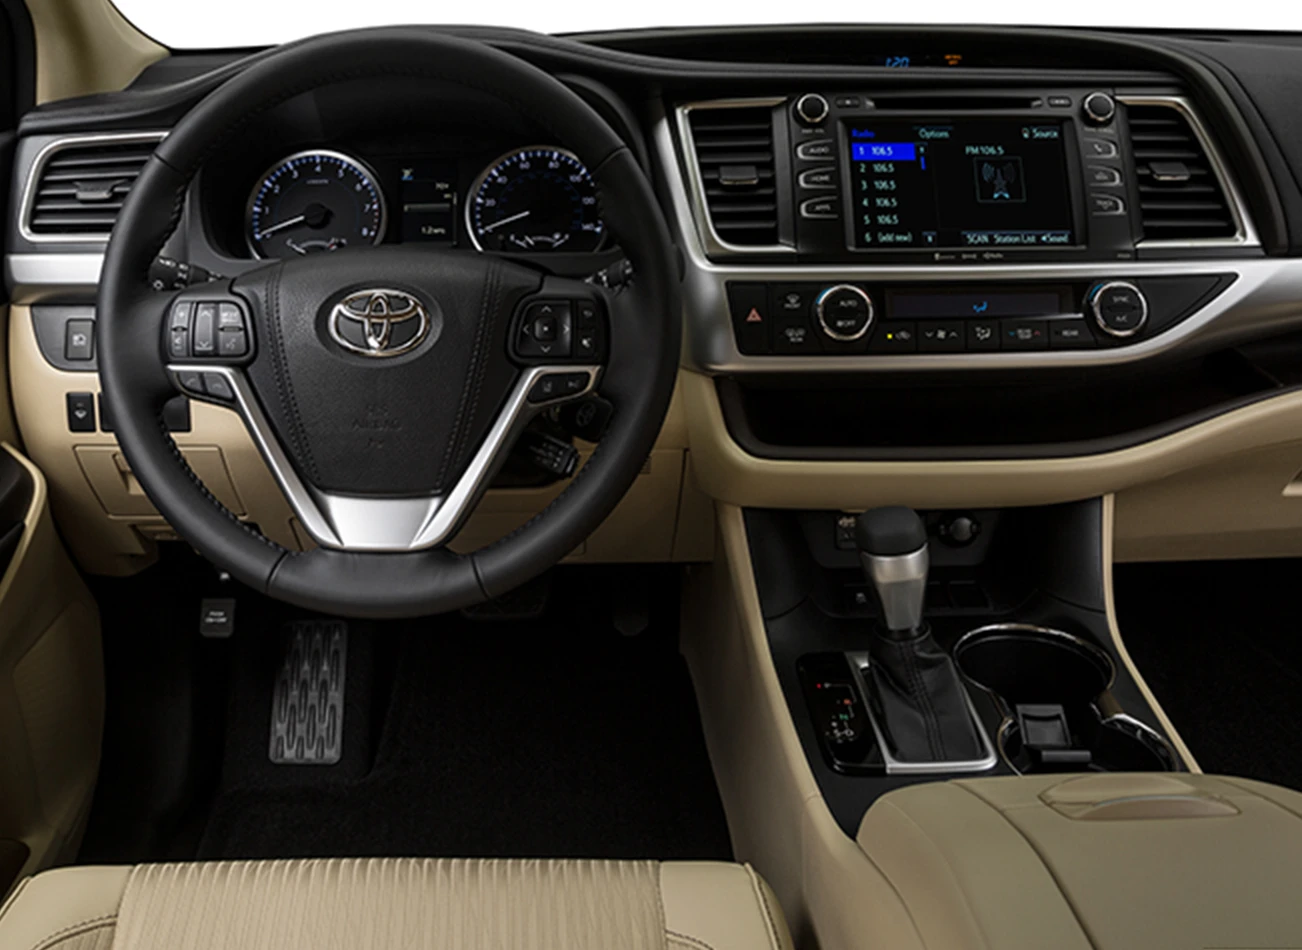 2018 Toyota Highlander Review: Dashboard | CarMax